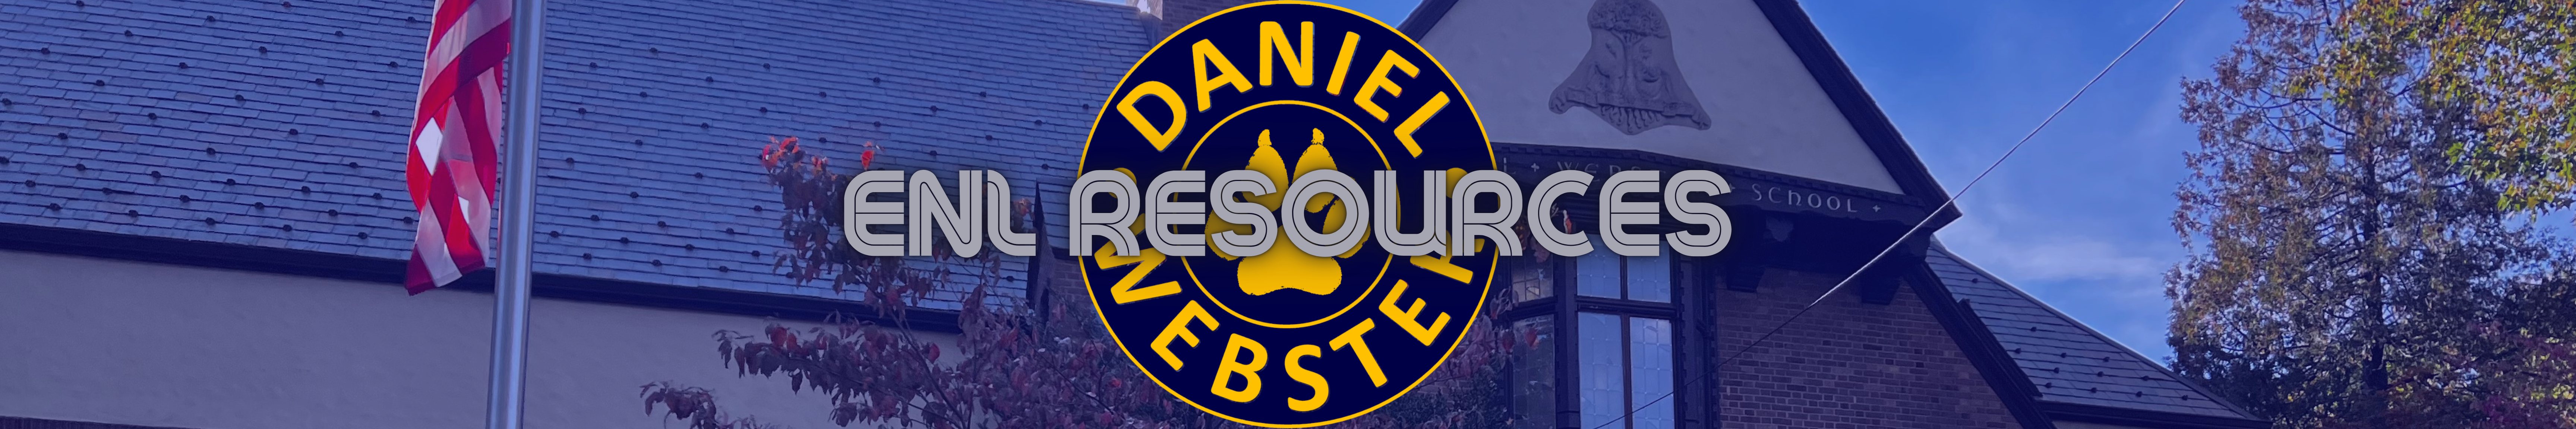 Resources banner